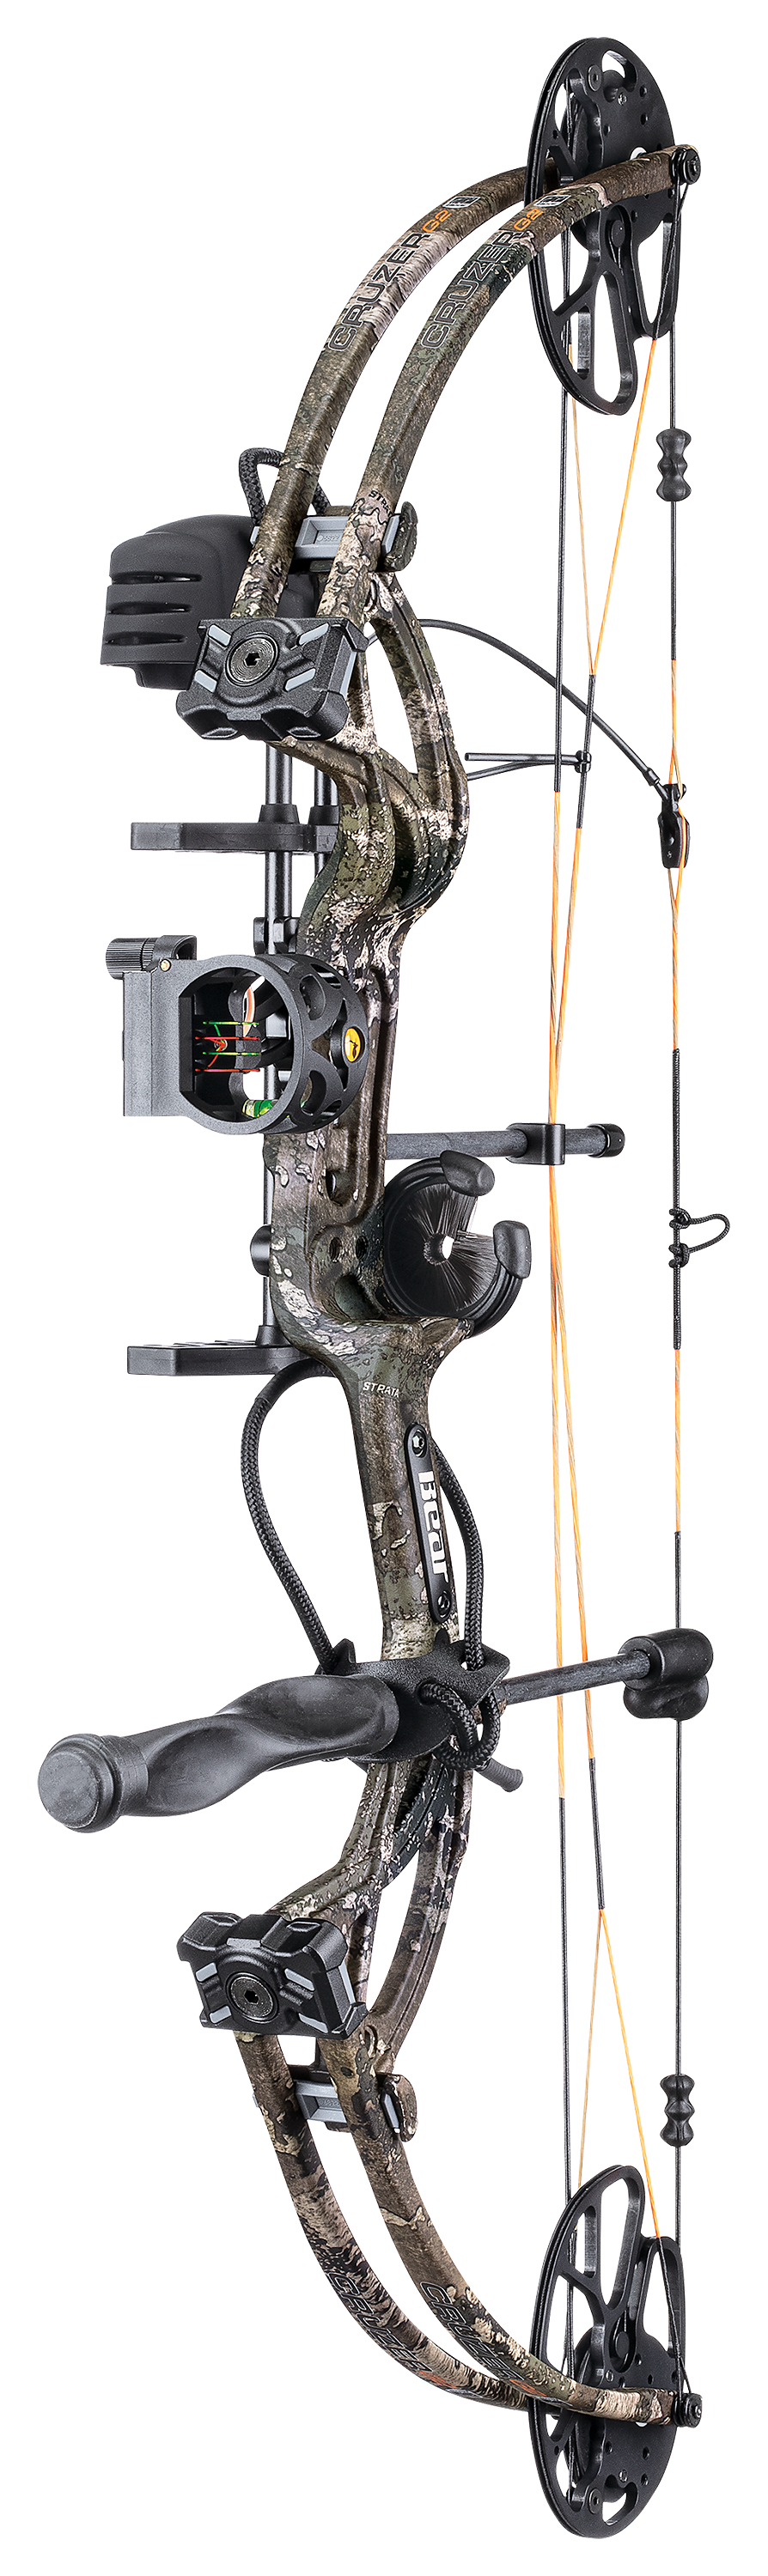 Bear Archery Cruzer G2 RTH Compound Bow Package - Left Hand - TrueTimber Strata